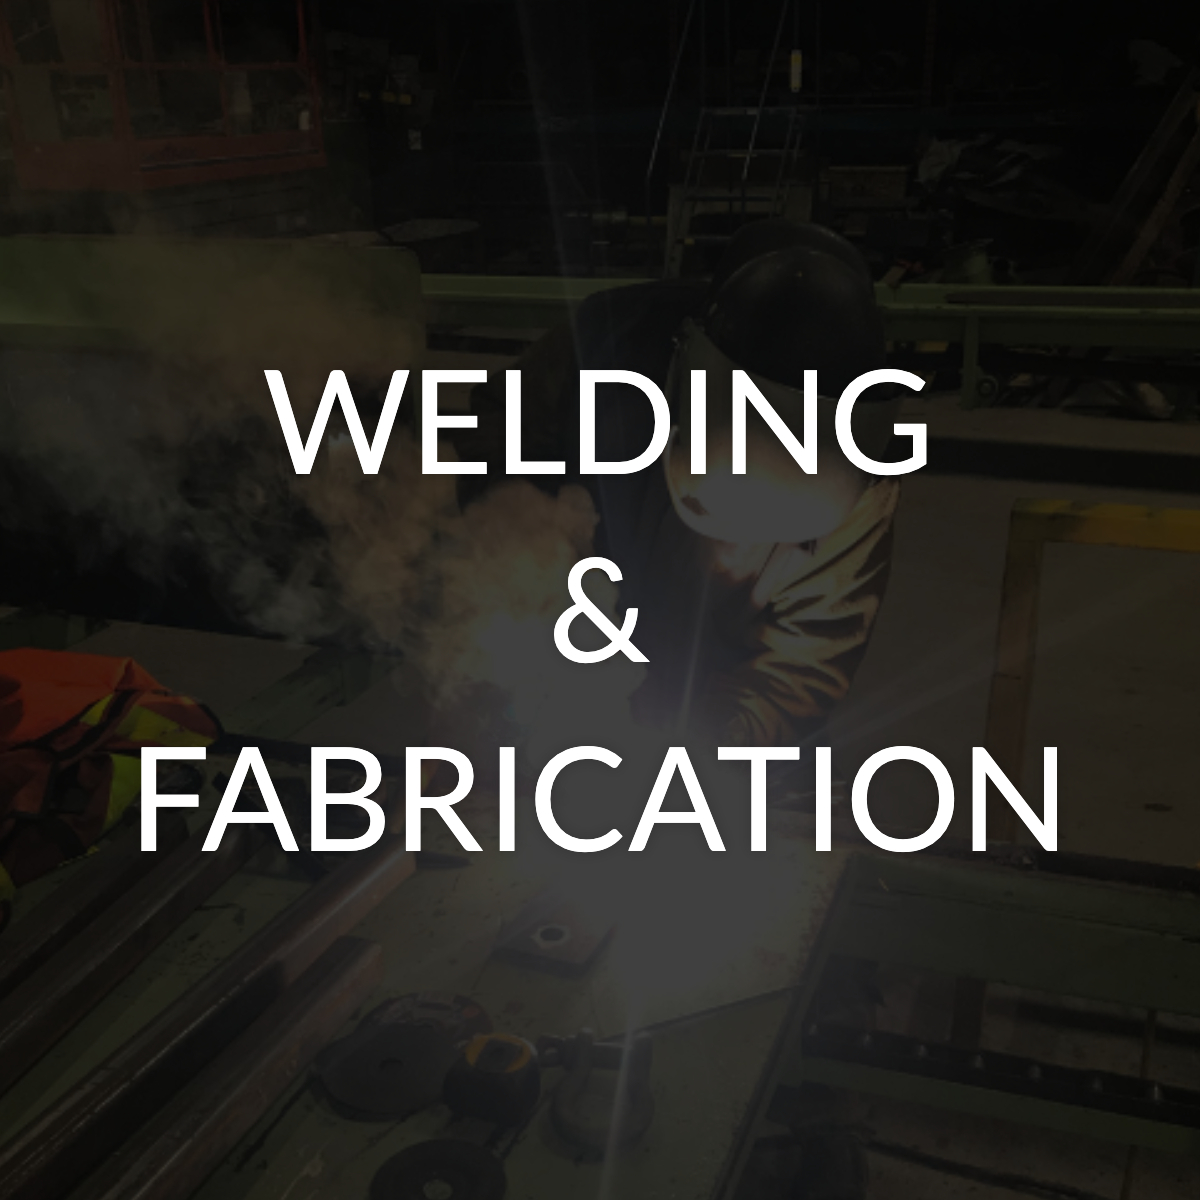 690-wp-welding-and-fabrication-2.jpg